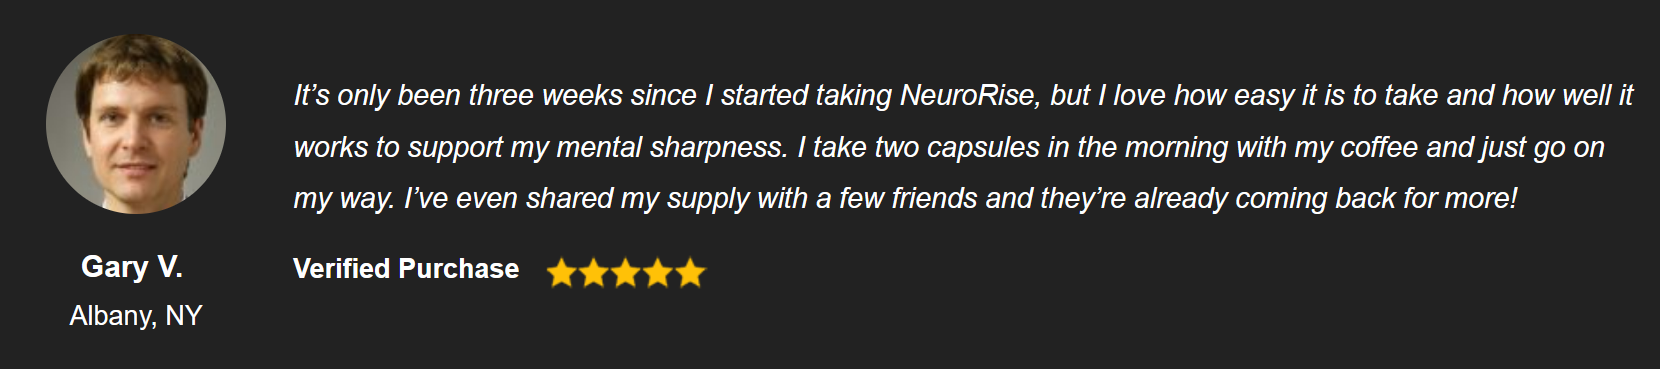 NeuroRise-customer-reviews